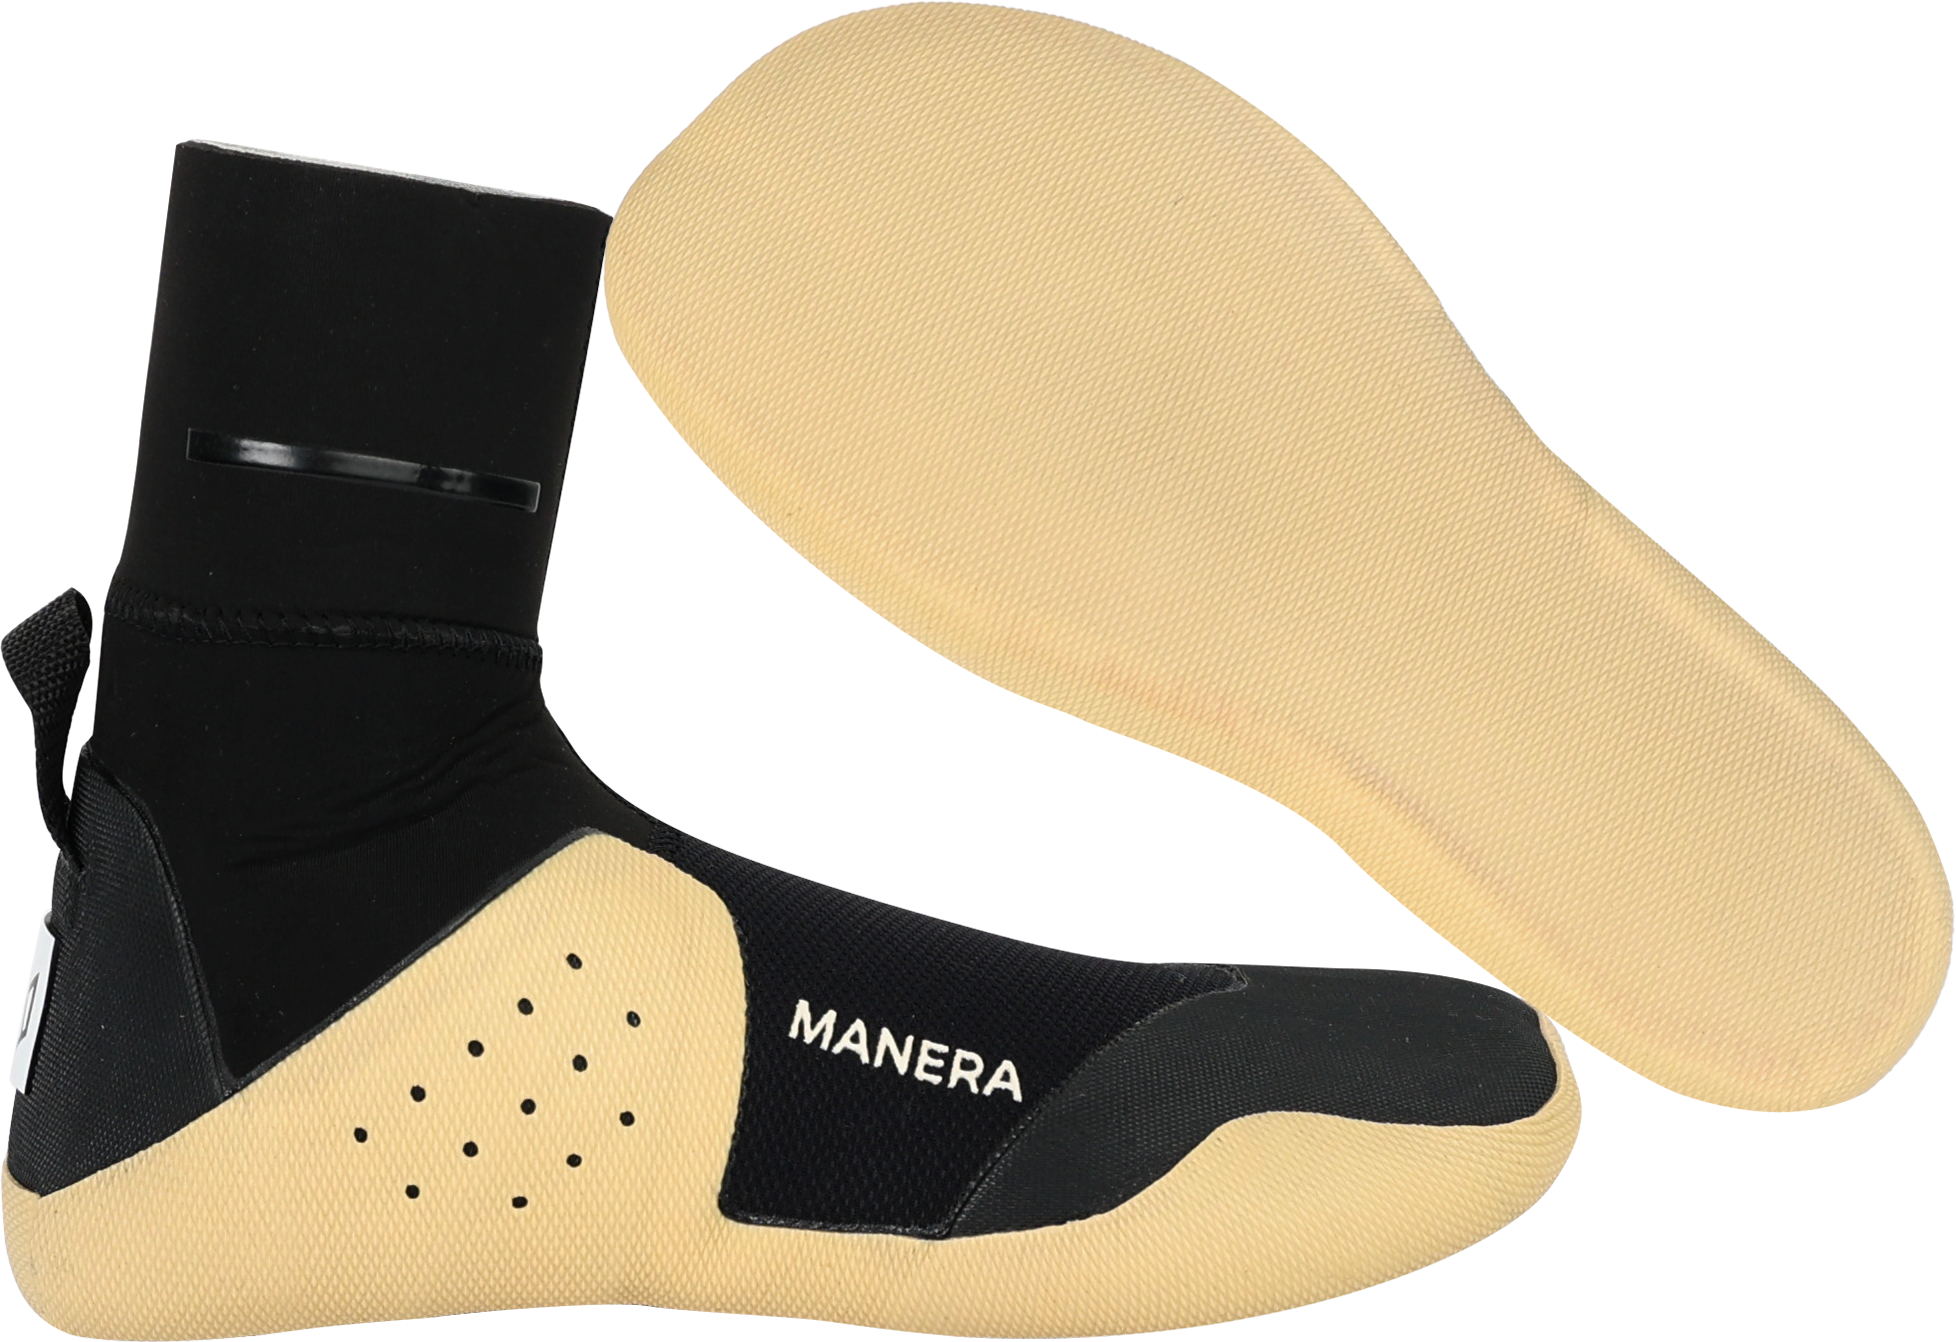 Manera MAGMA Boots 5mm - Round toe